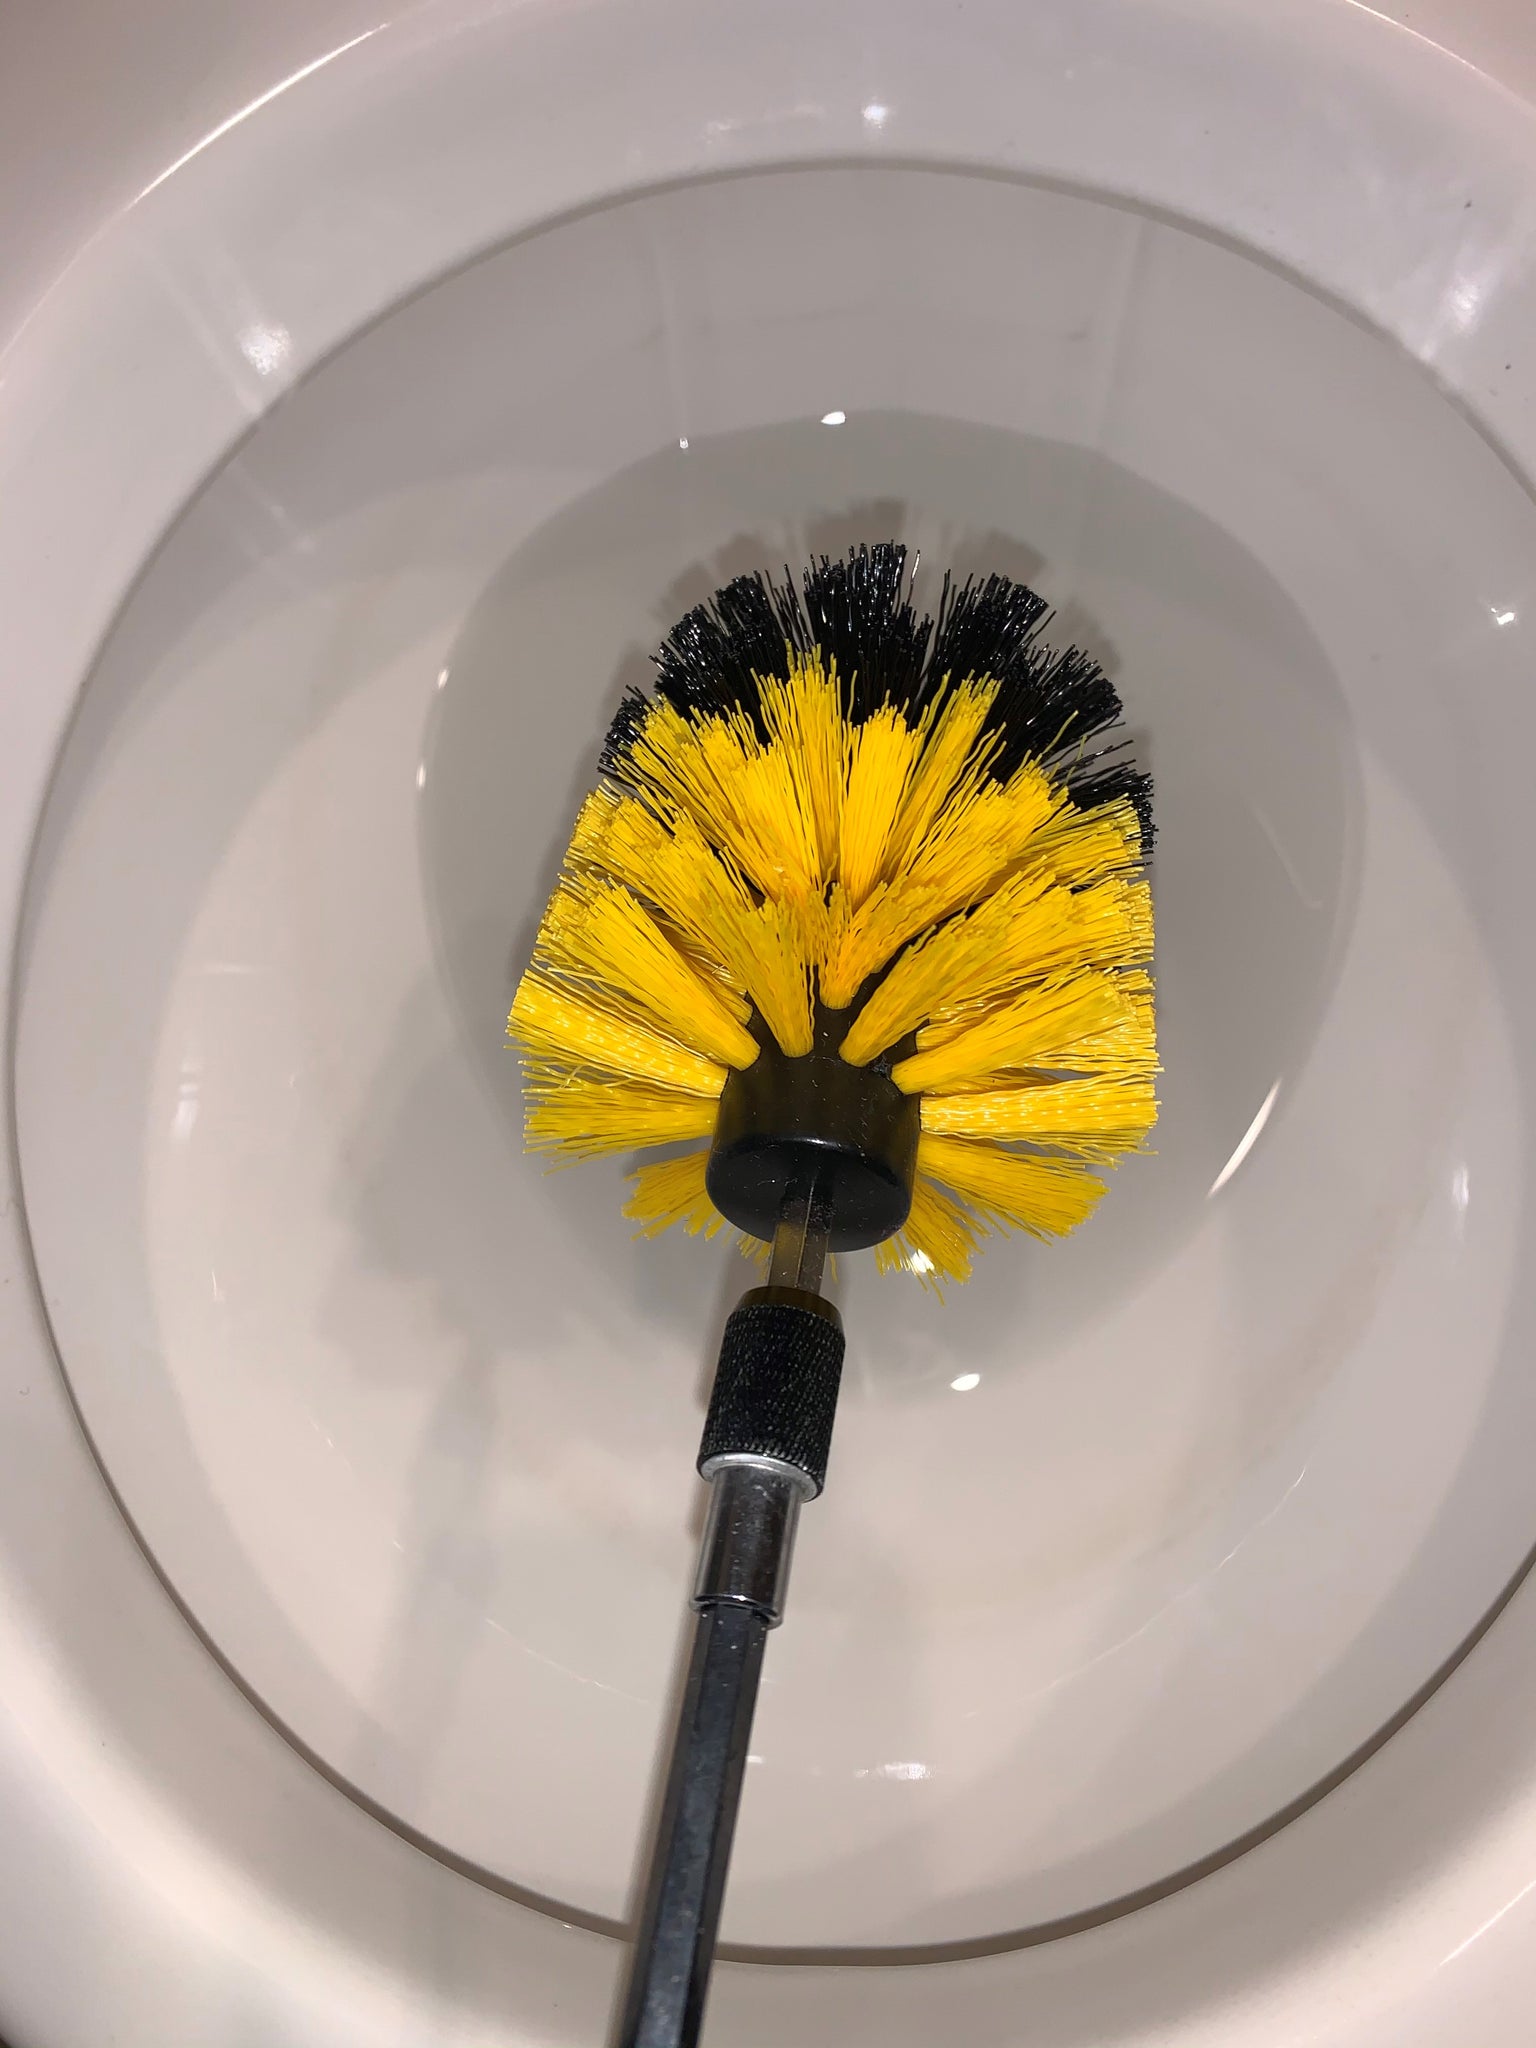 3 Piece - Diamond Shine Bathroom Cleaner & Scrub Brush Combo with